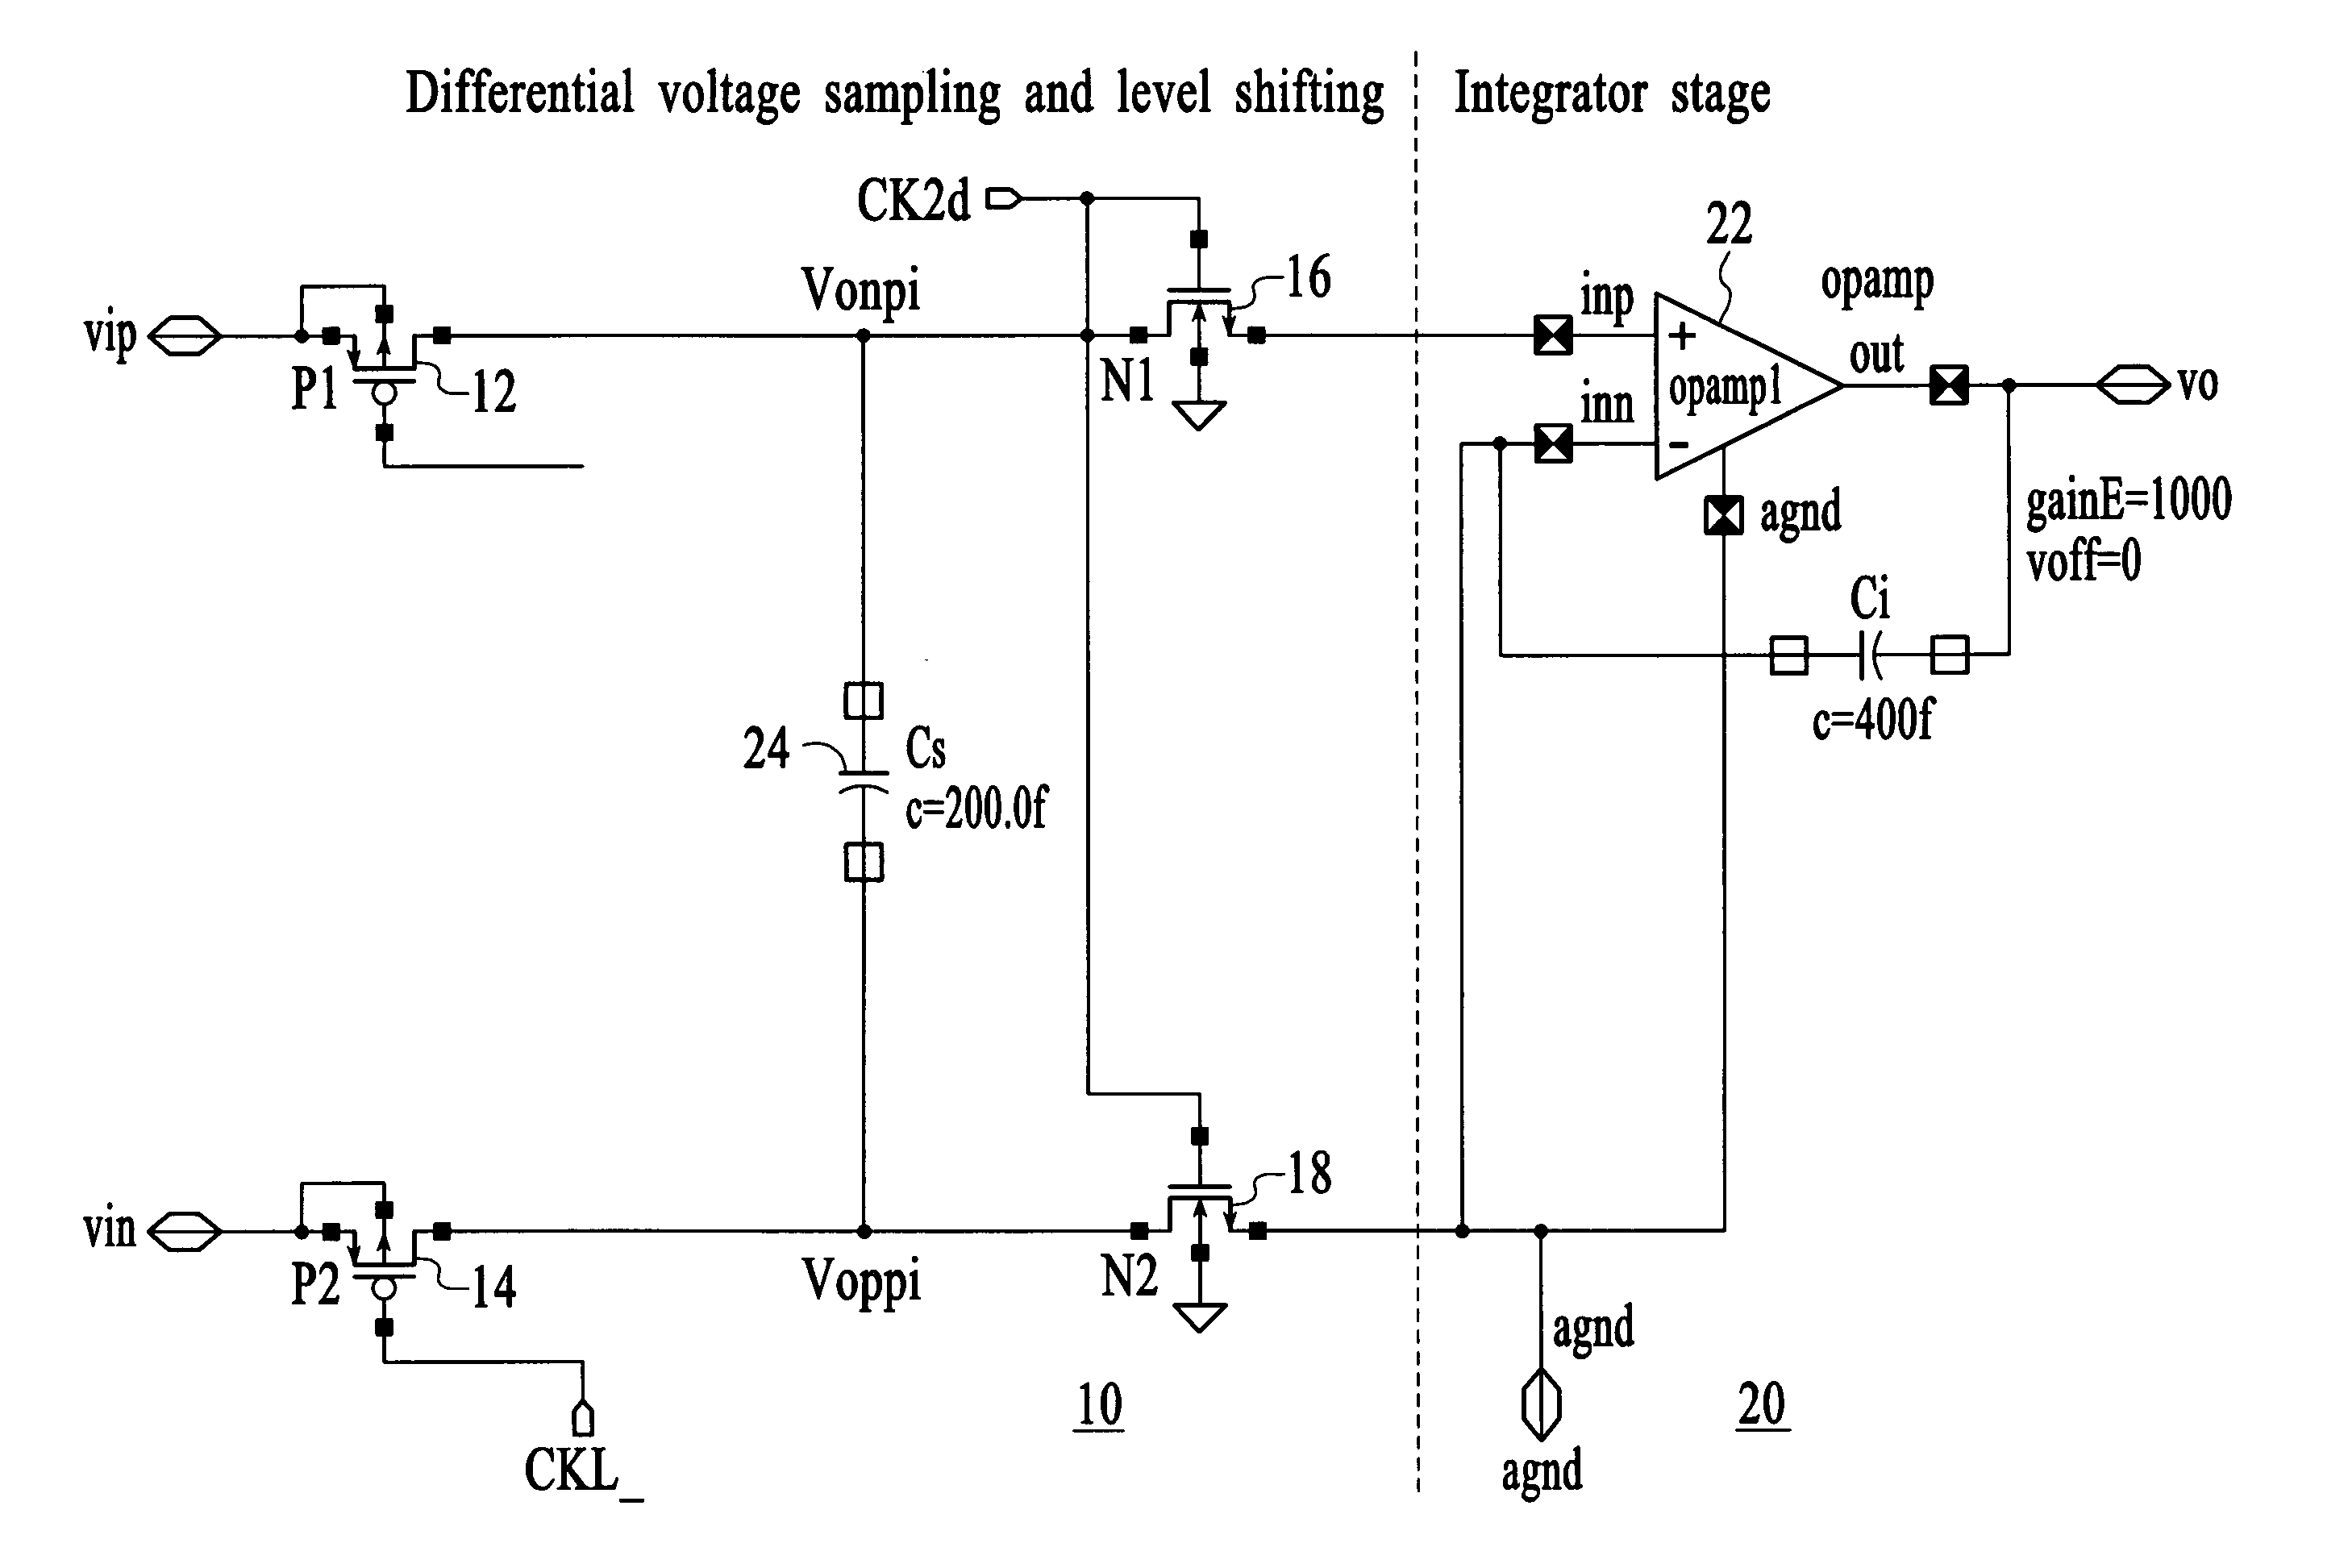 Sampling and level shifting circuit